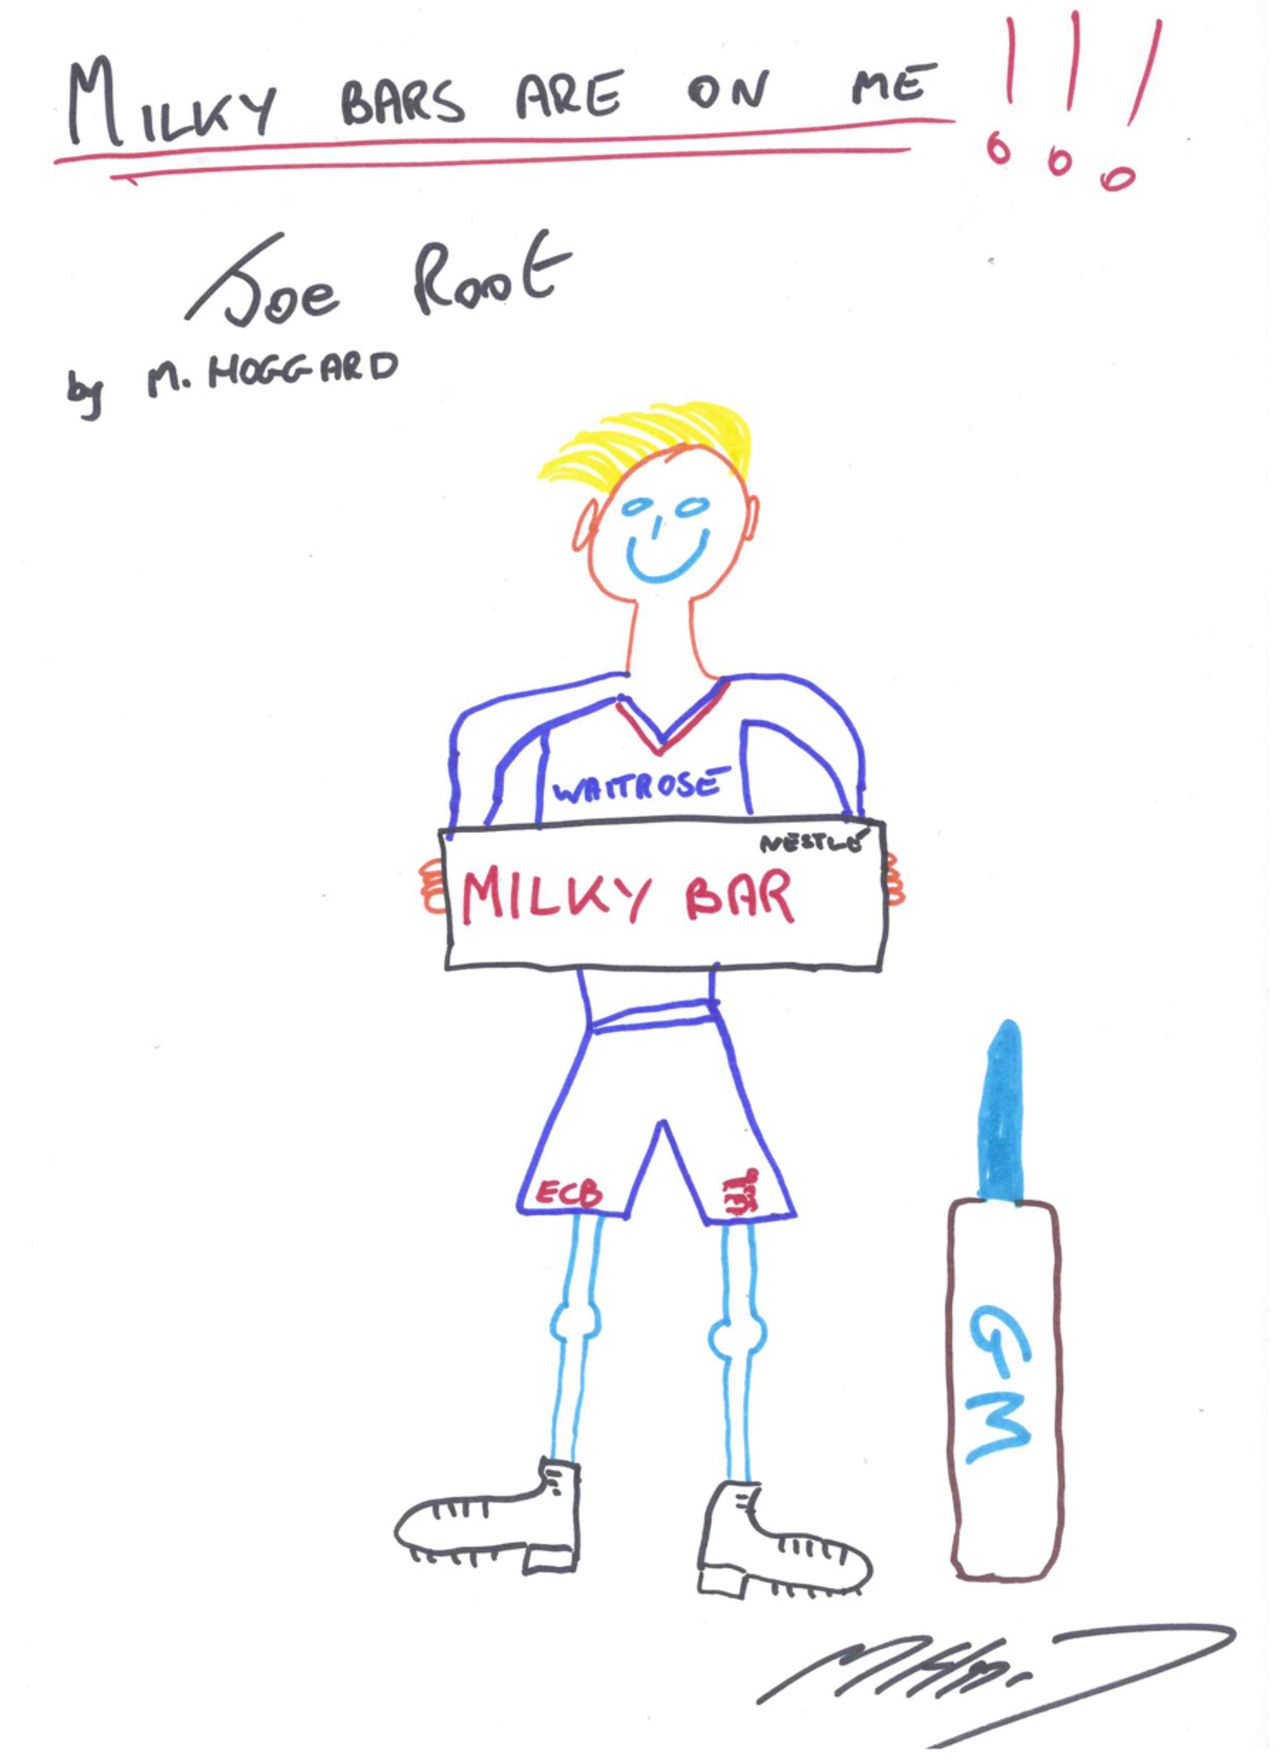 Joe Root as the Milky Bar boy, by Matthew Hoggard